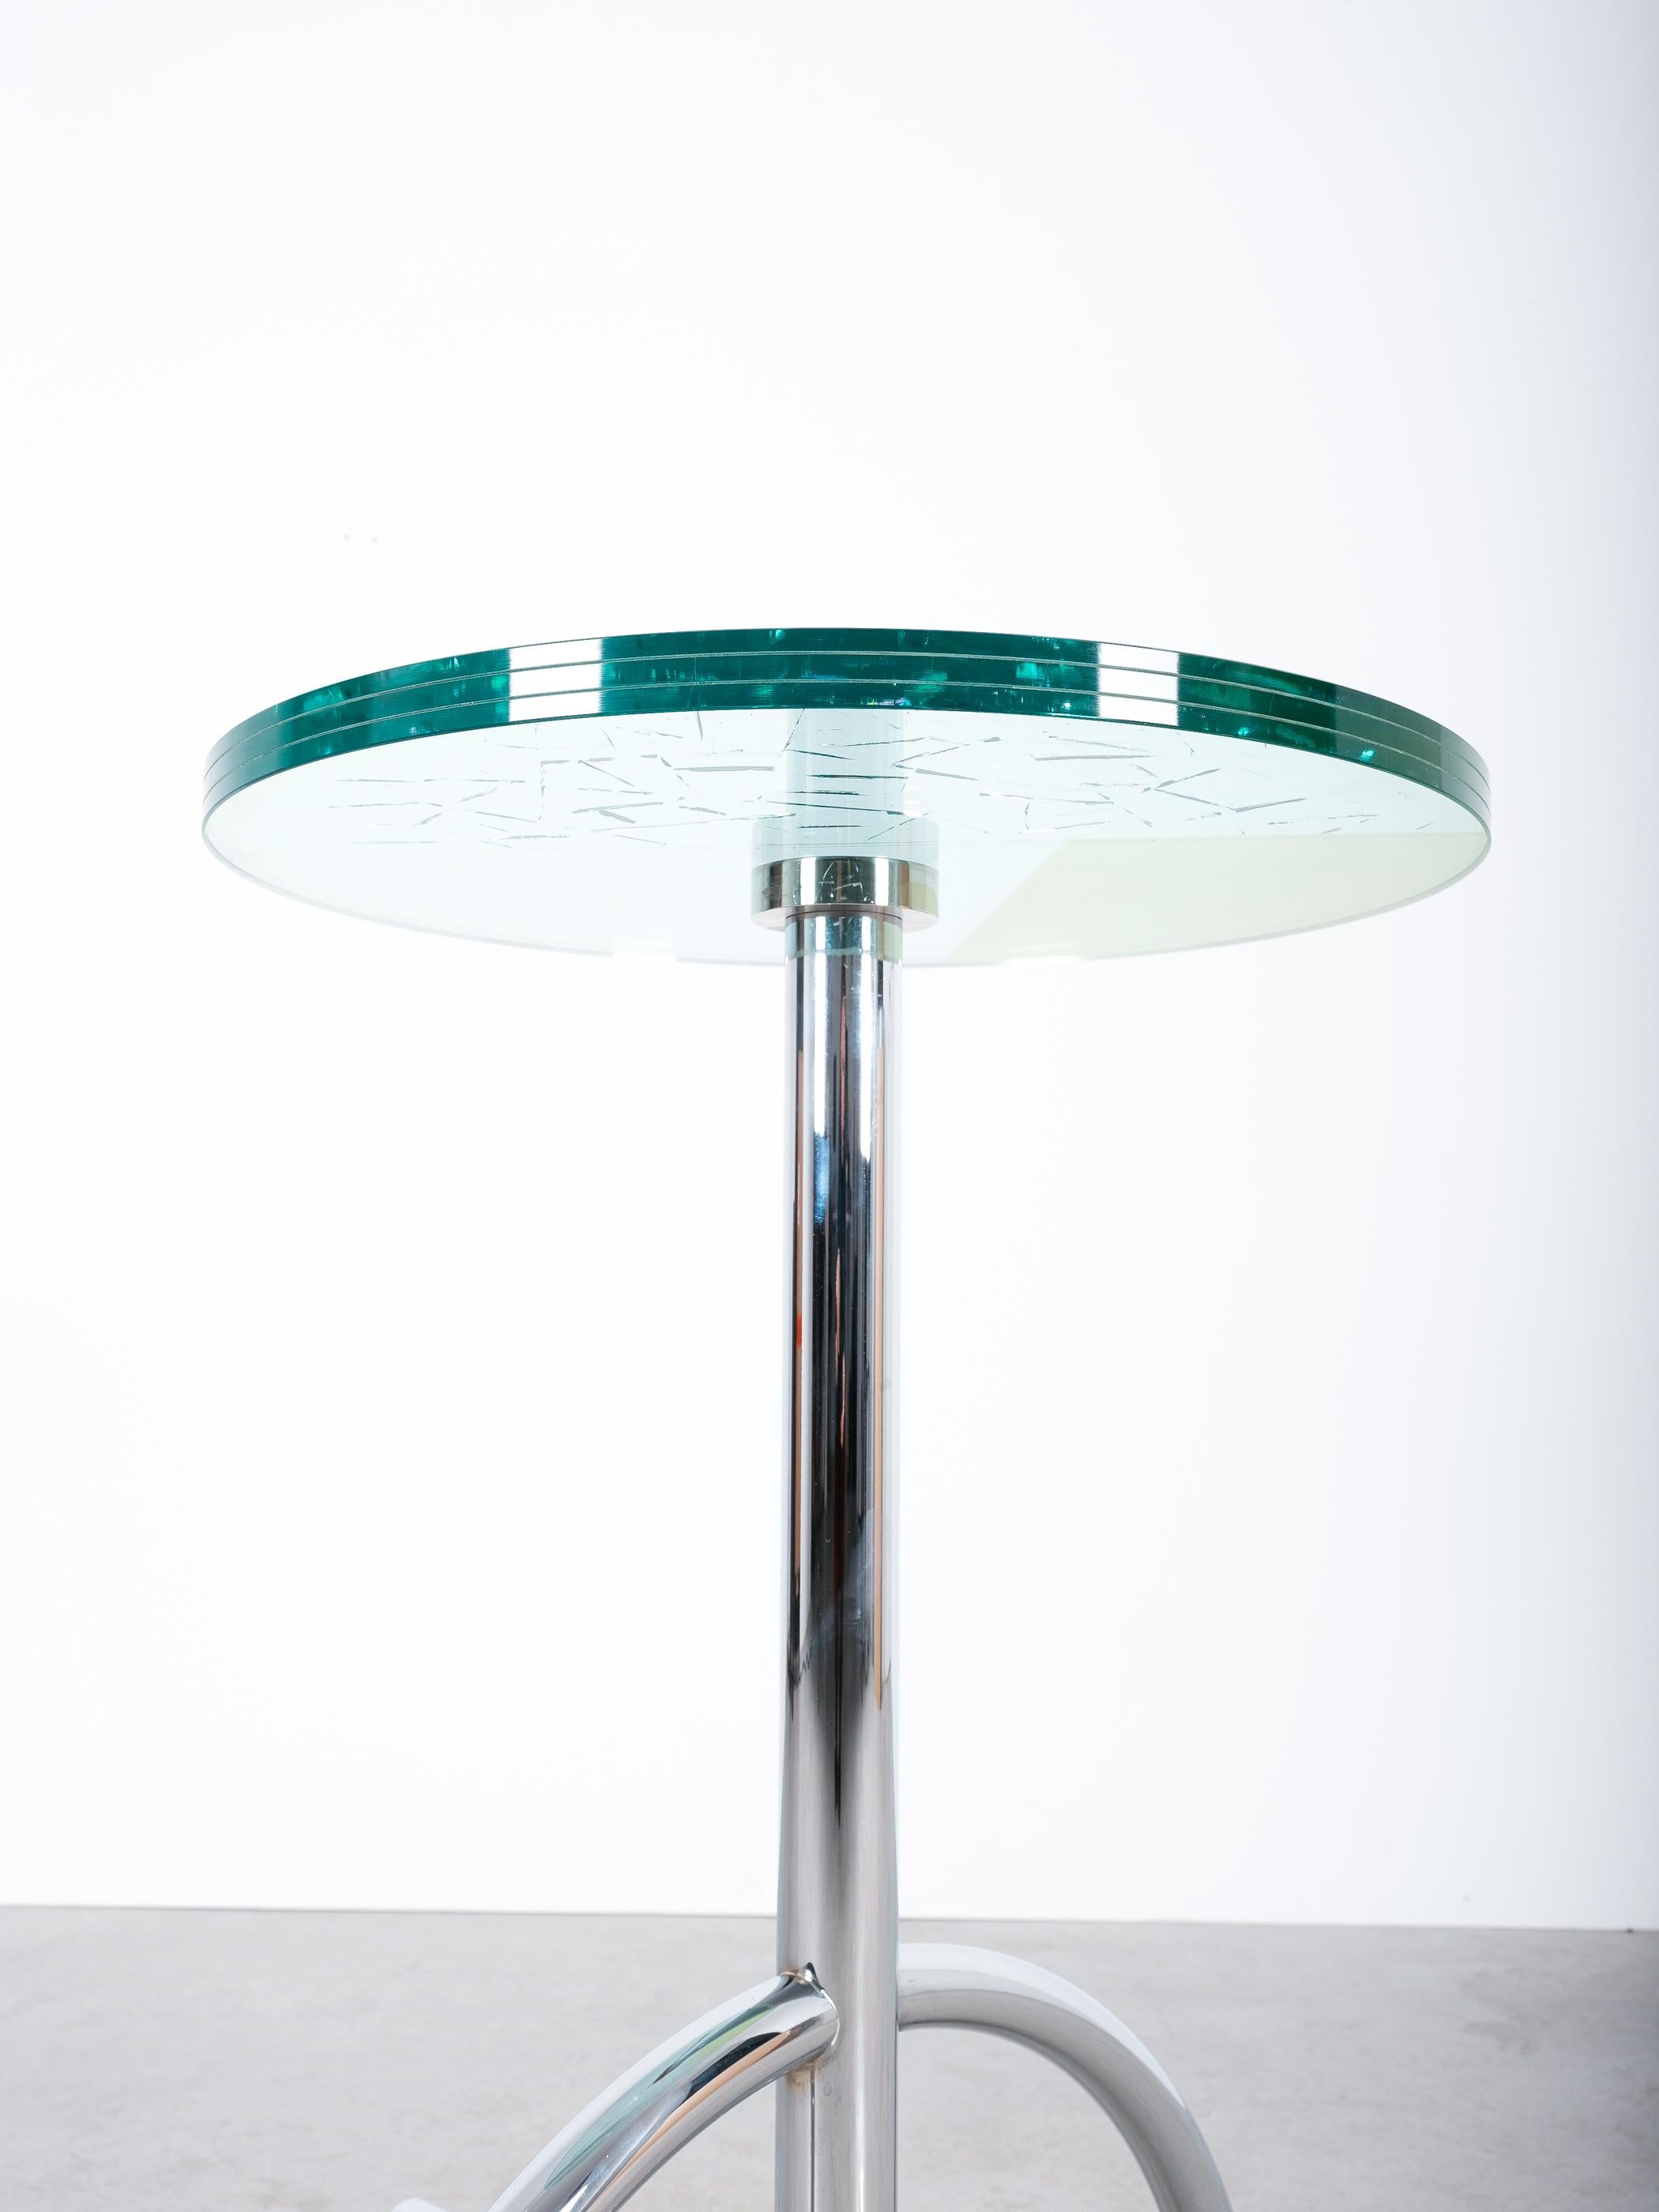 Japanese Memphis Table By Shiro Kuramata Sally Glass Chrome Rolling Table, 1987 For Sale